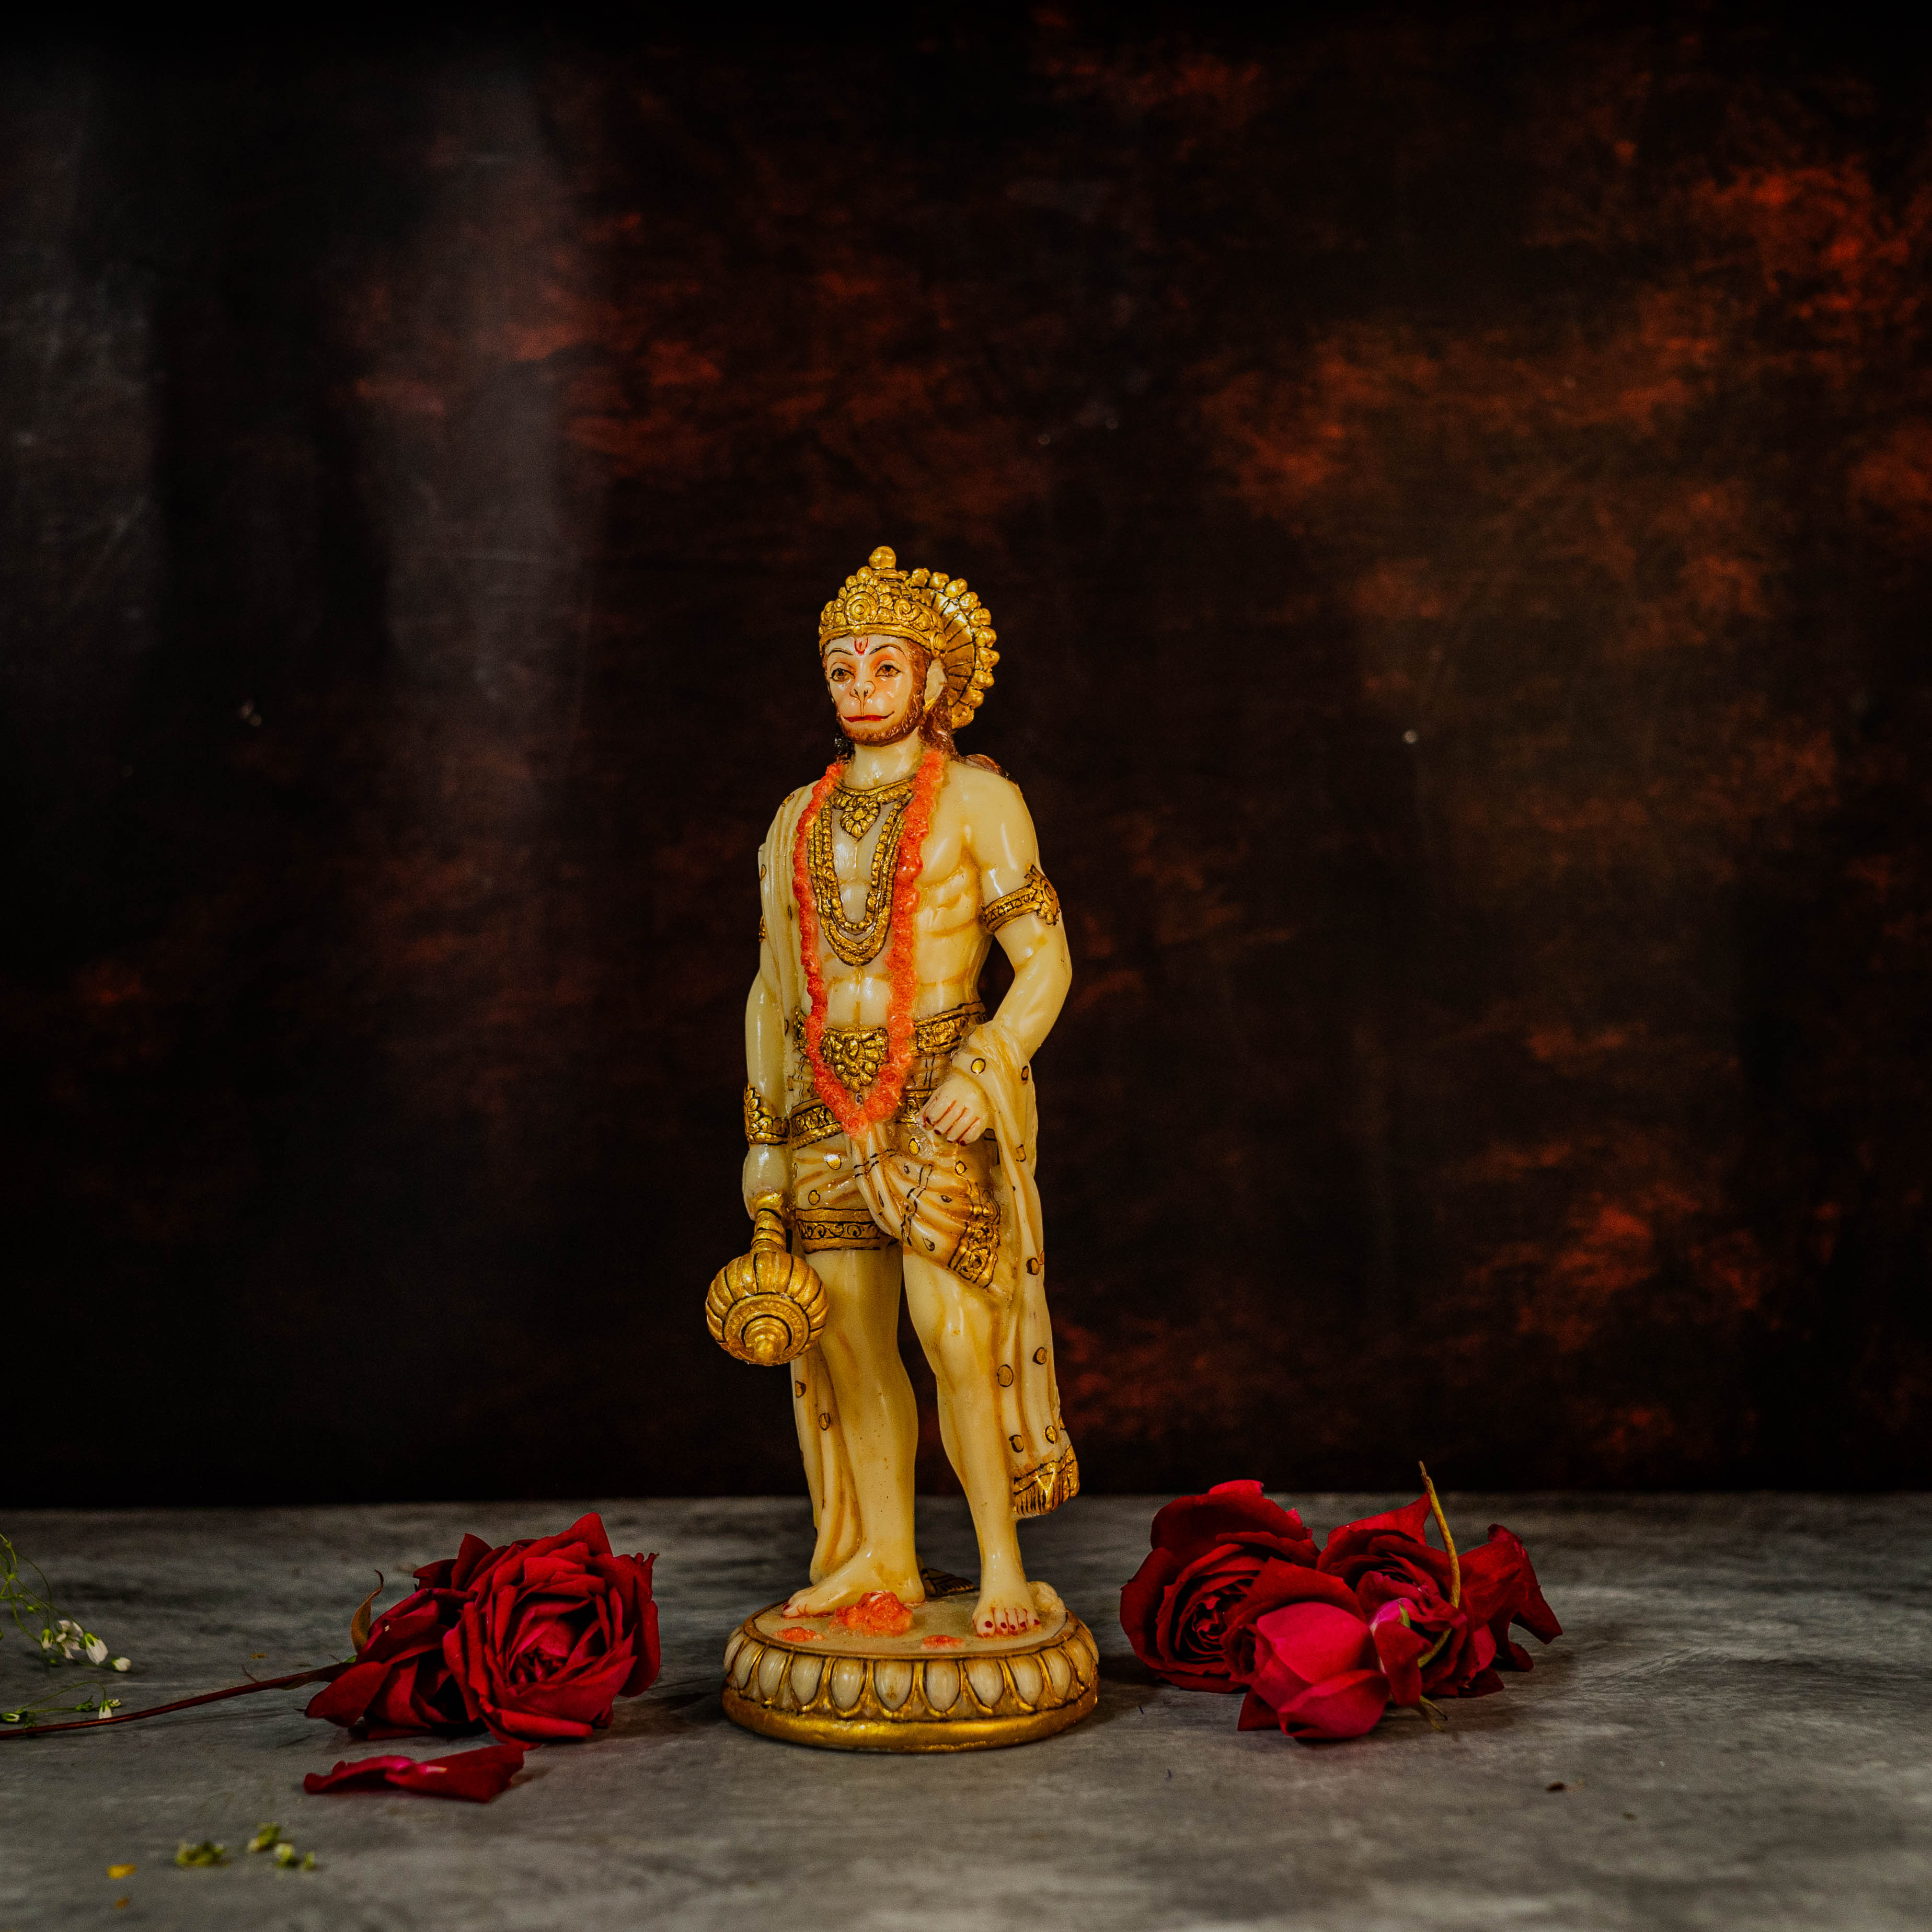 10" Standing Lord Hanuman Statue